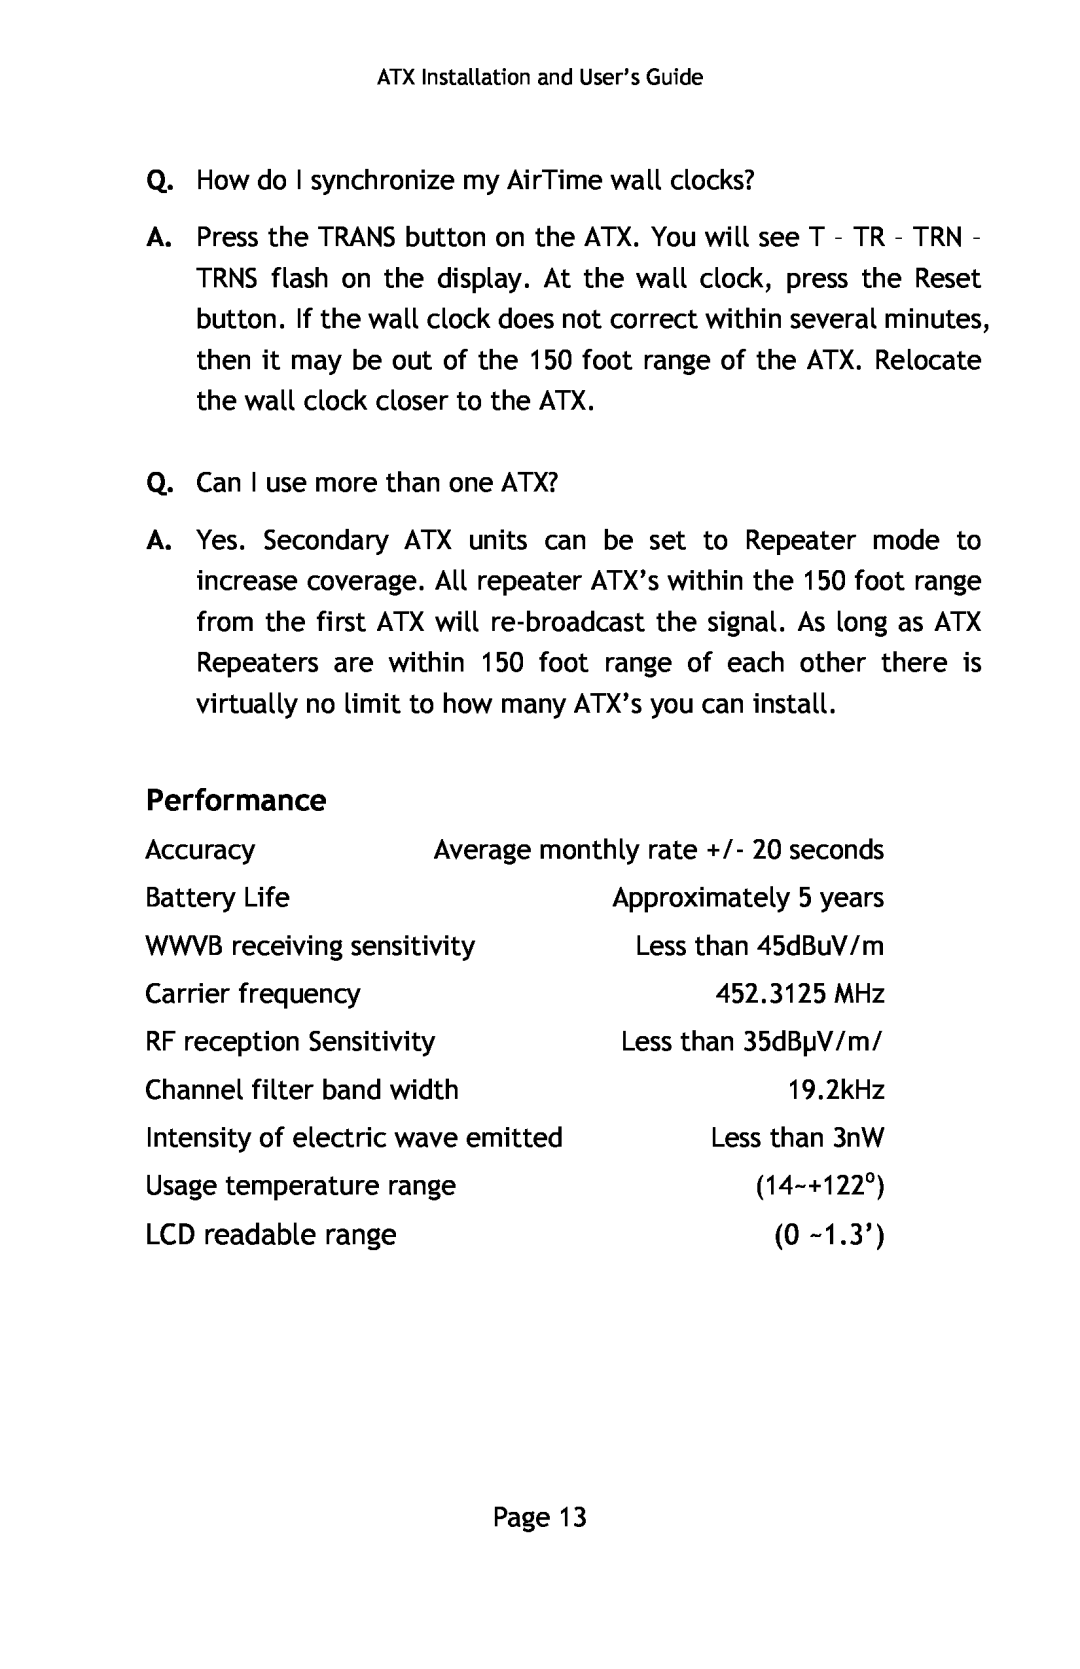 Lathem ATX manual Performance, LCD readable range, 0 ~1.3’ 